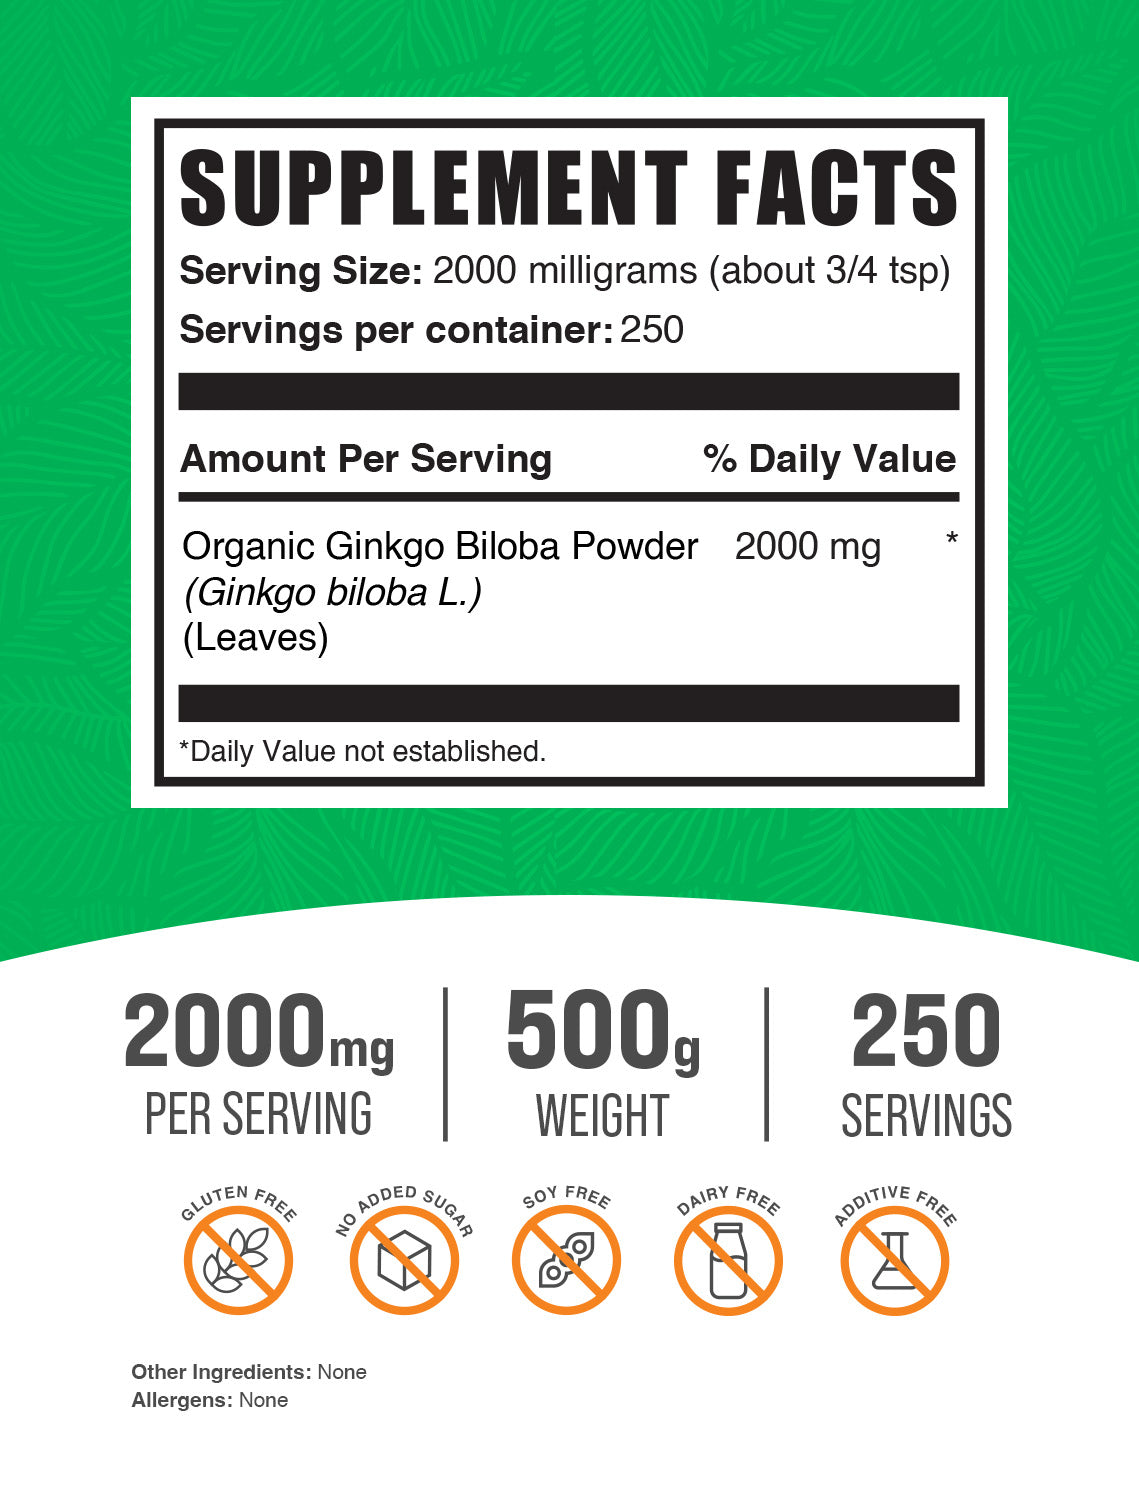 Organic Ginkgo Biloba Extract powder label 500g